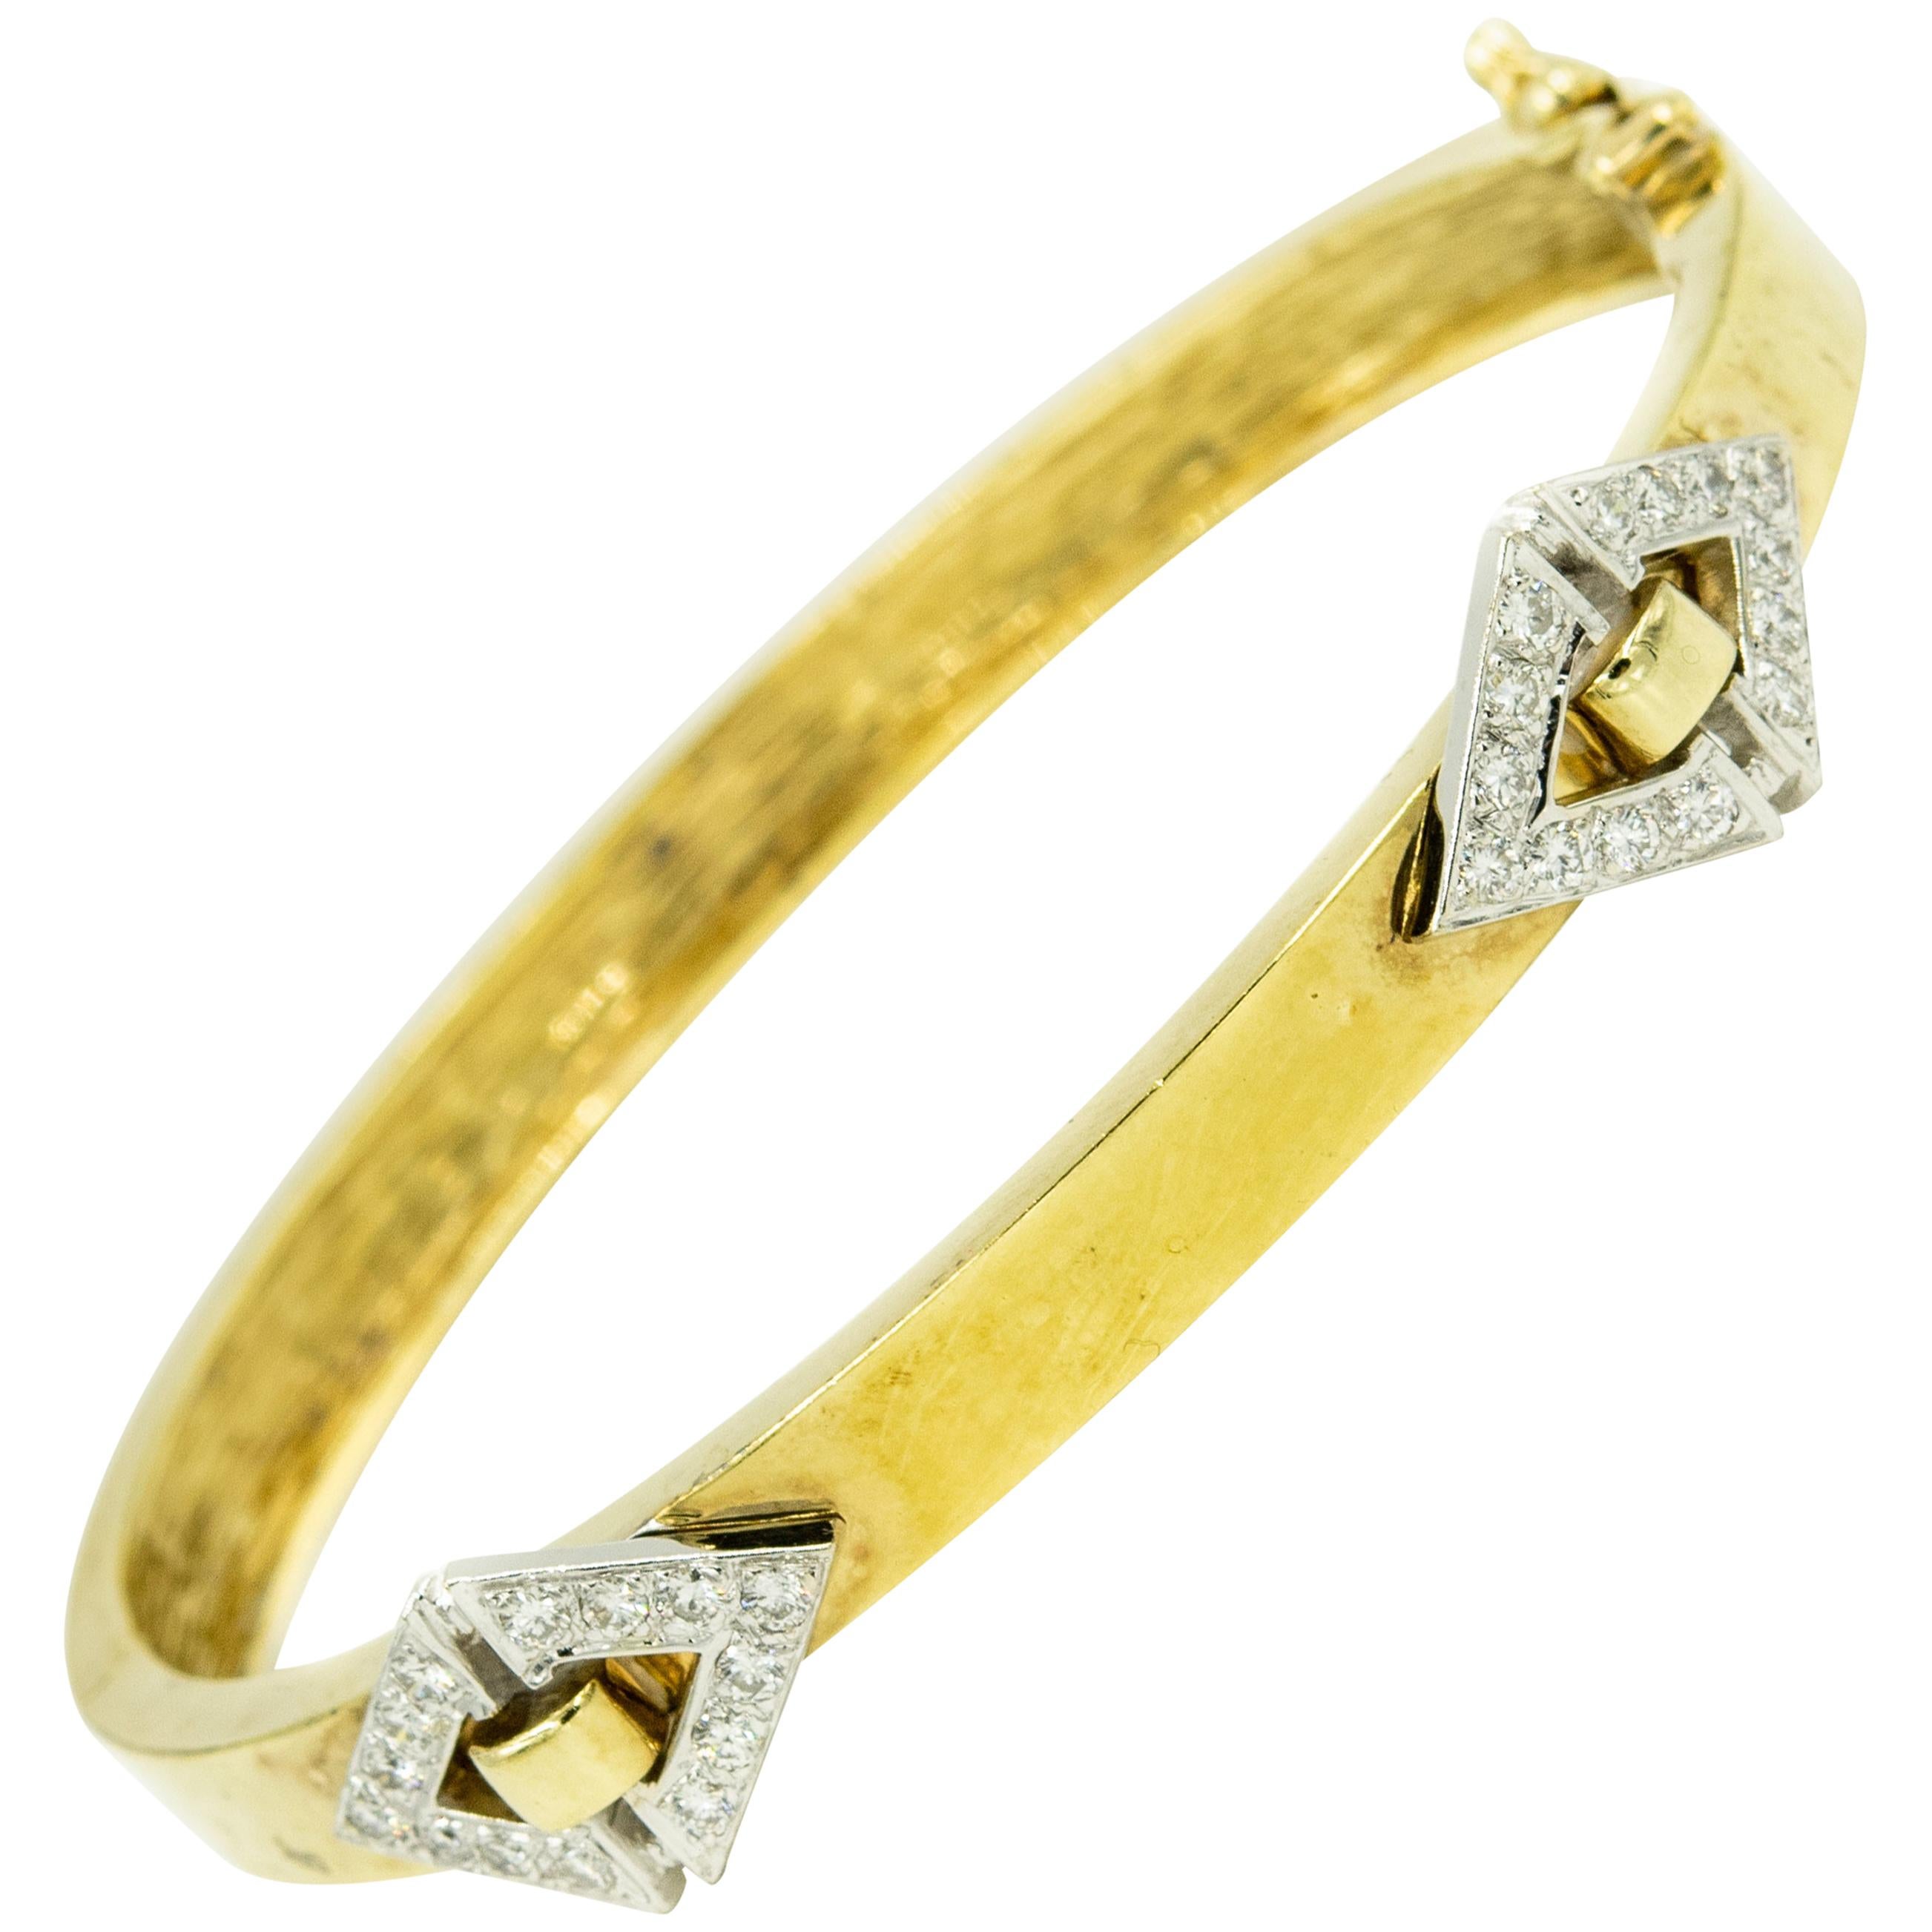 1970s Geometric Diamond Shaped Diamond and 14 Karat Yellow Gold Bangle Bracelet